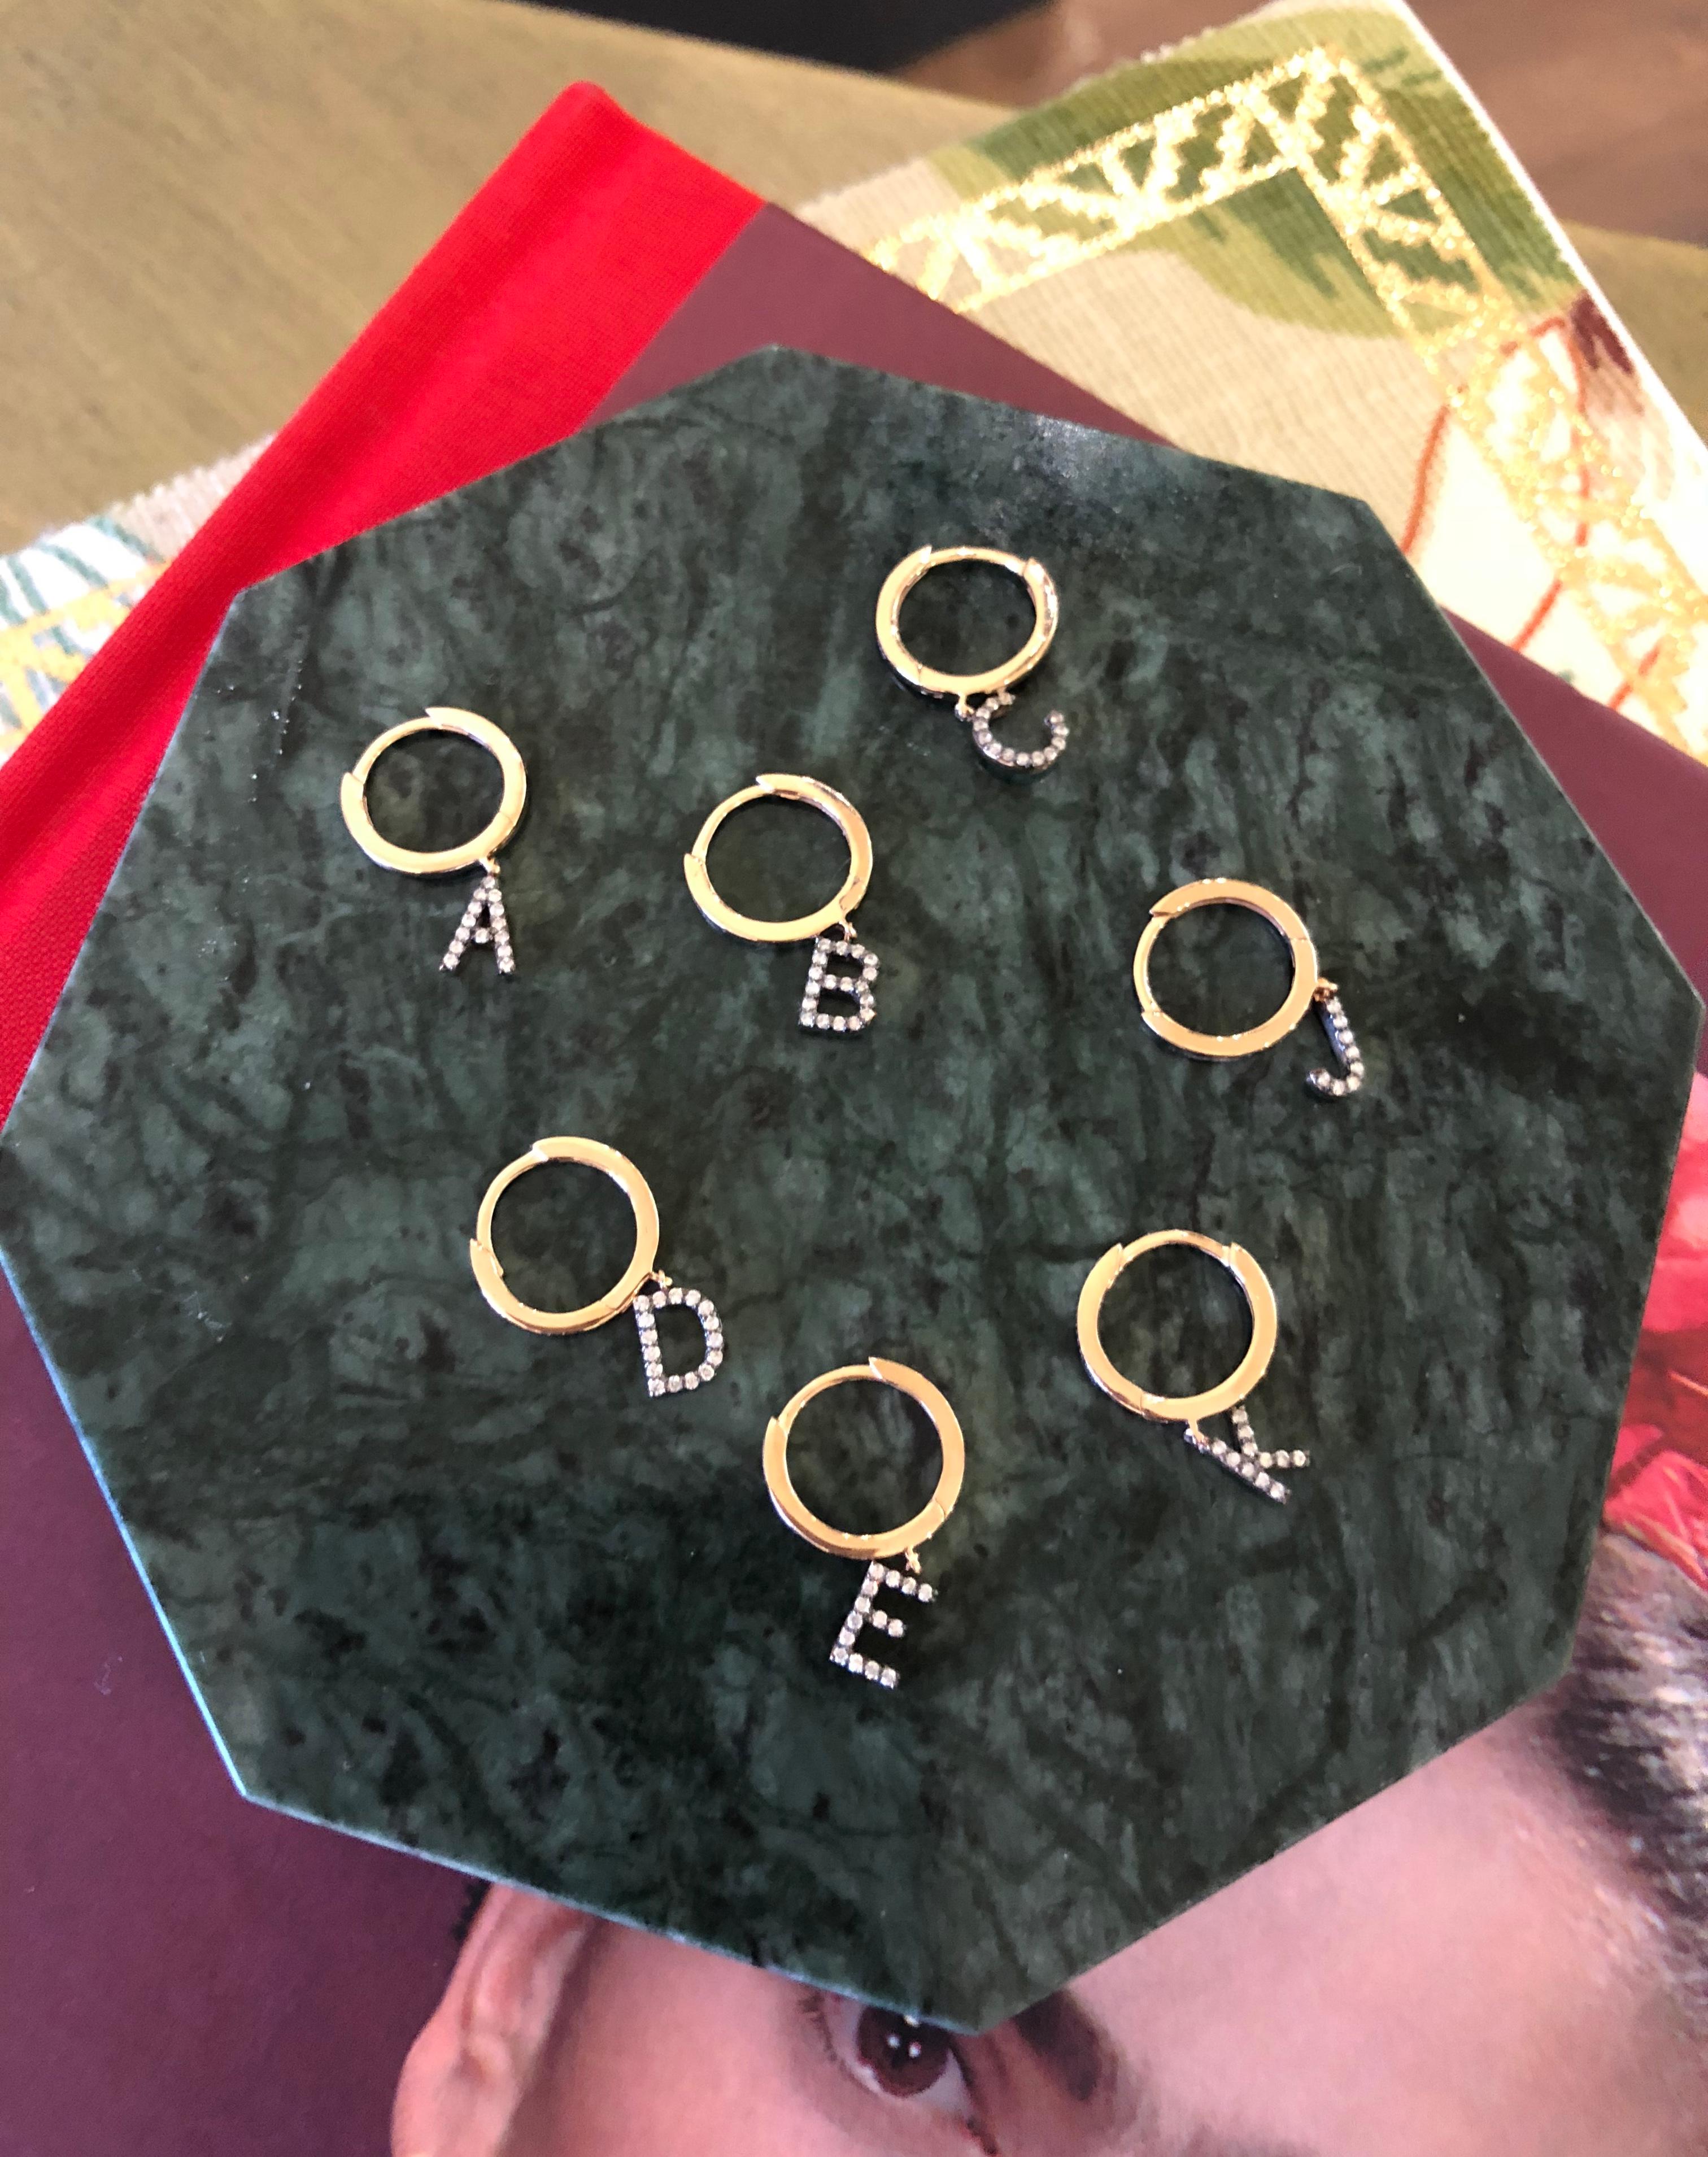 b letter earrings